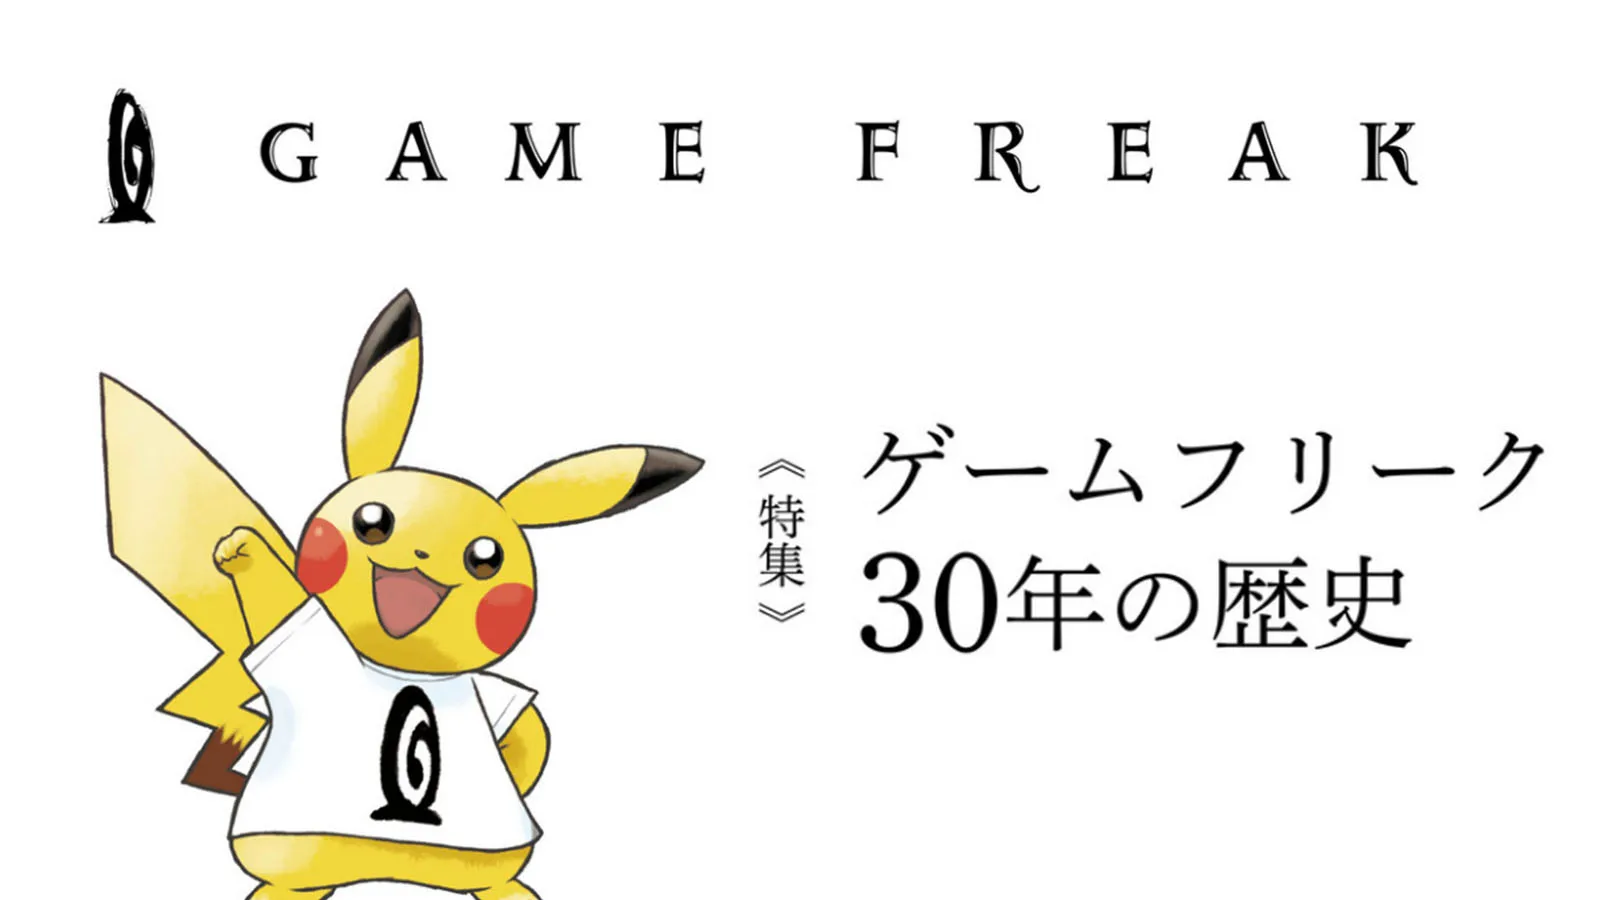 《Fami 通》新刊收录42页 GAME FREAK 特集，包含游戏年表、对谈及首次公开资料